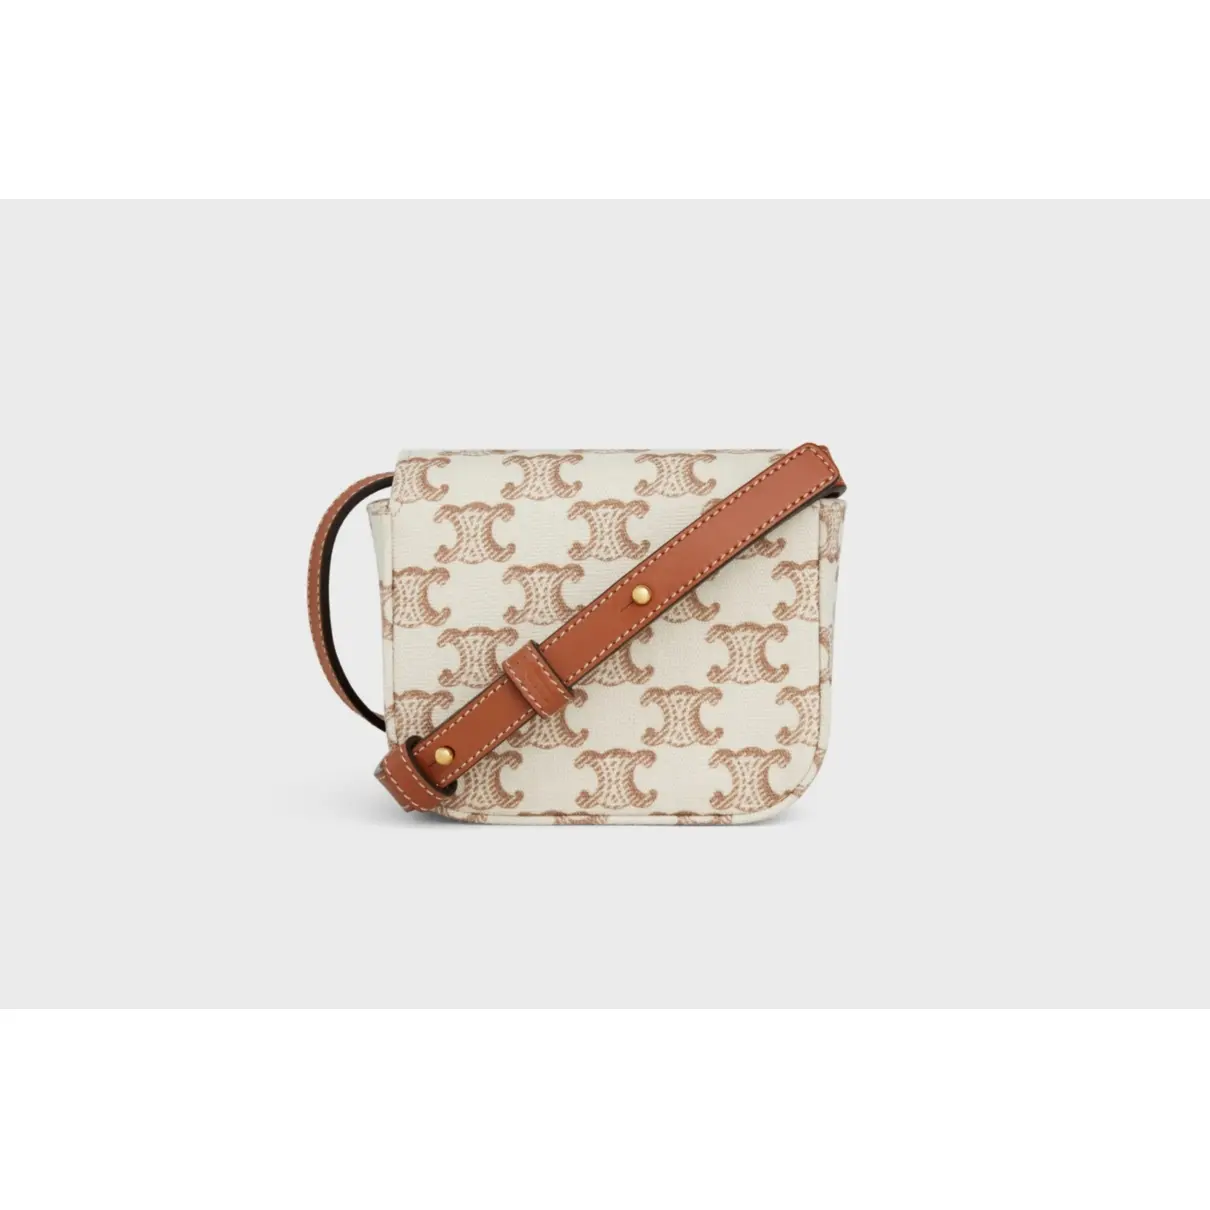 Buy Celine Triomphe cloth mini bag online